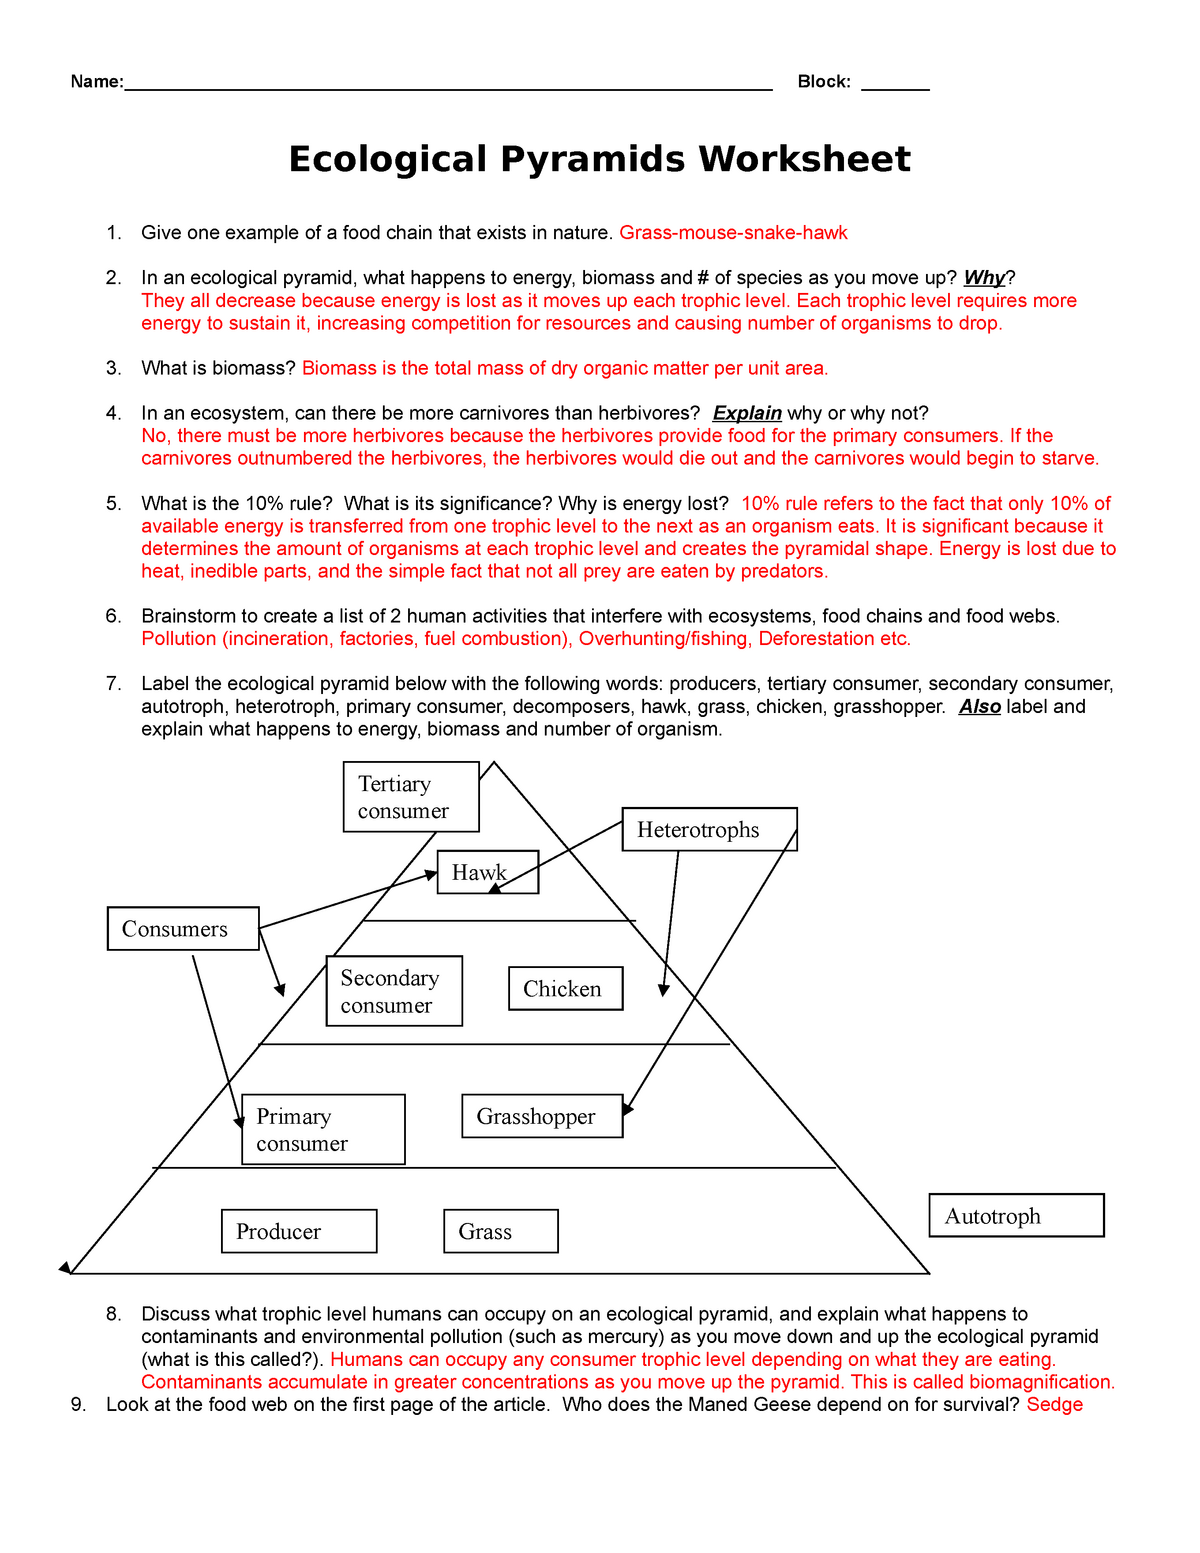 KEY ecological-pyramids-worksheet 22 - LIFESCI 22P022 - McMaster With Regard To Ecology Review Worksheet 1